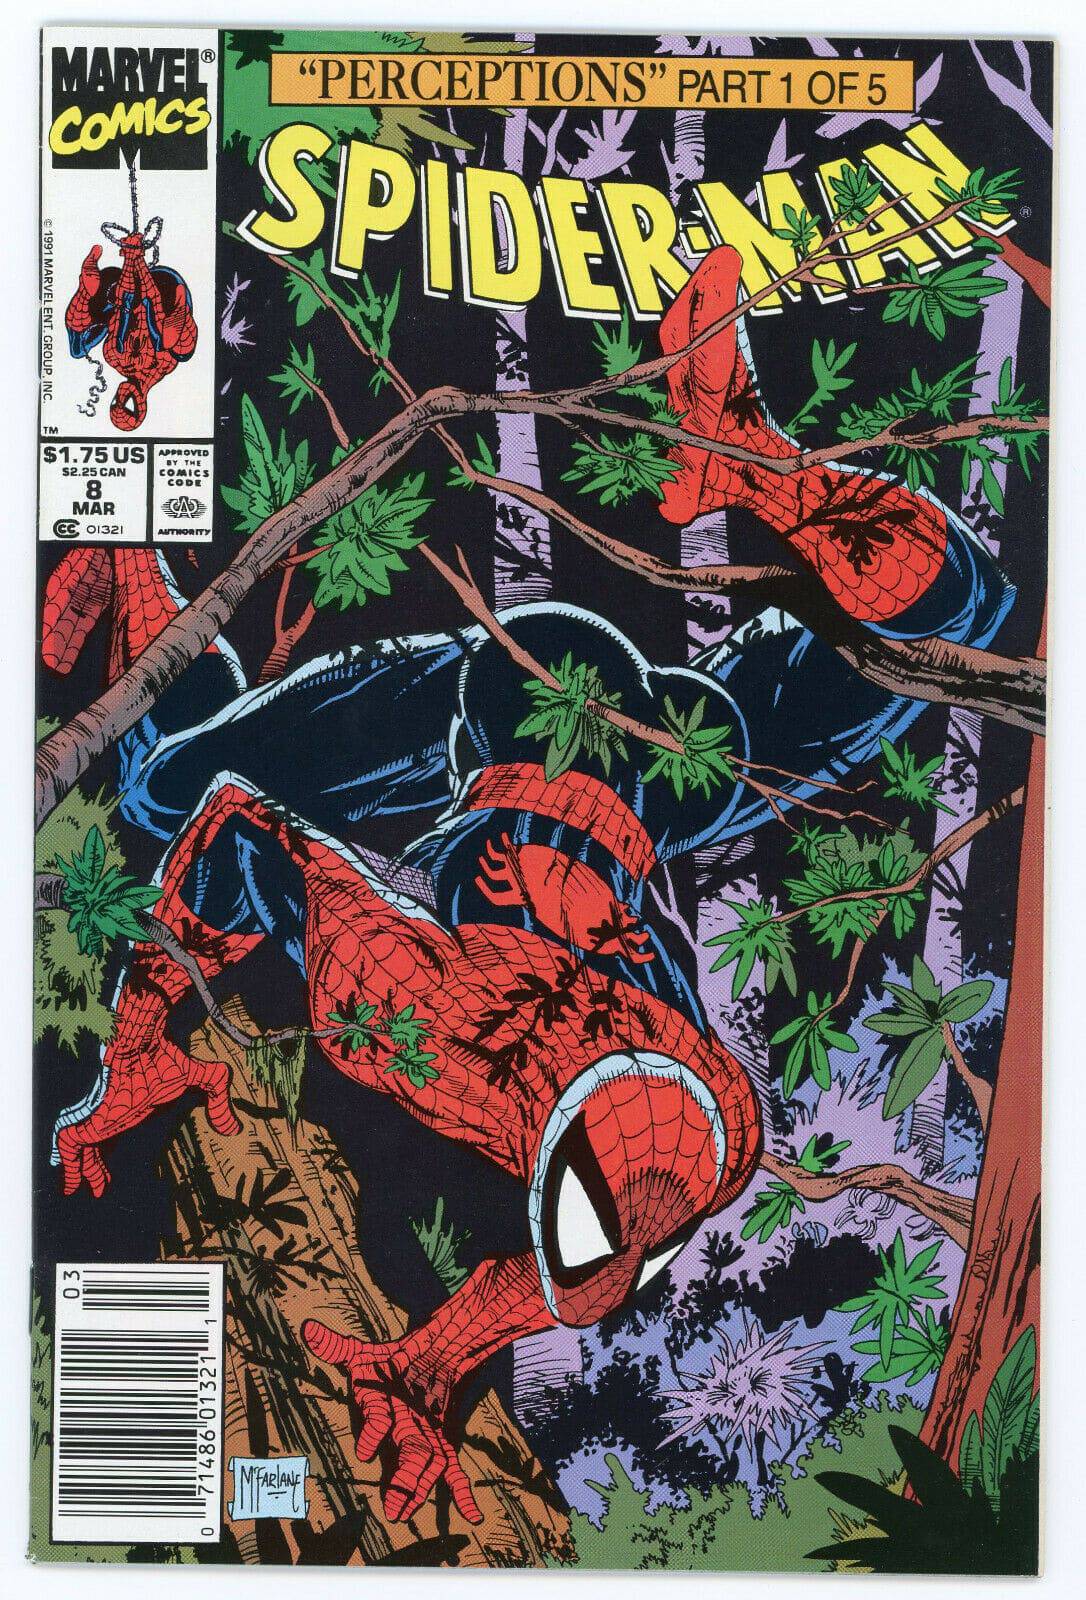 Spider-Man #8 Perceptions Part 1 Todd McFarlane King Gaming